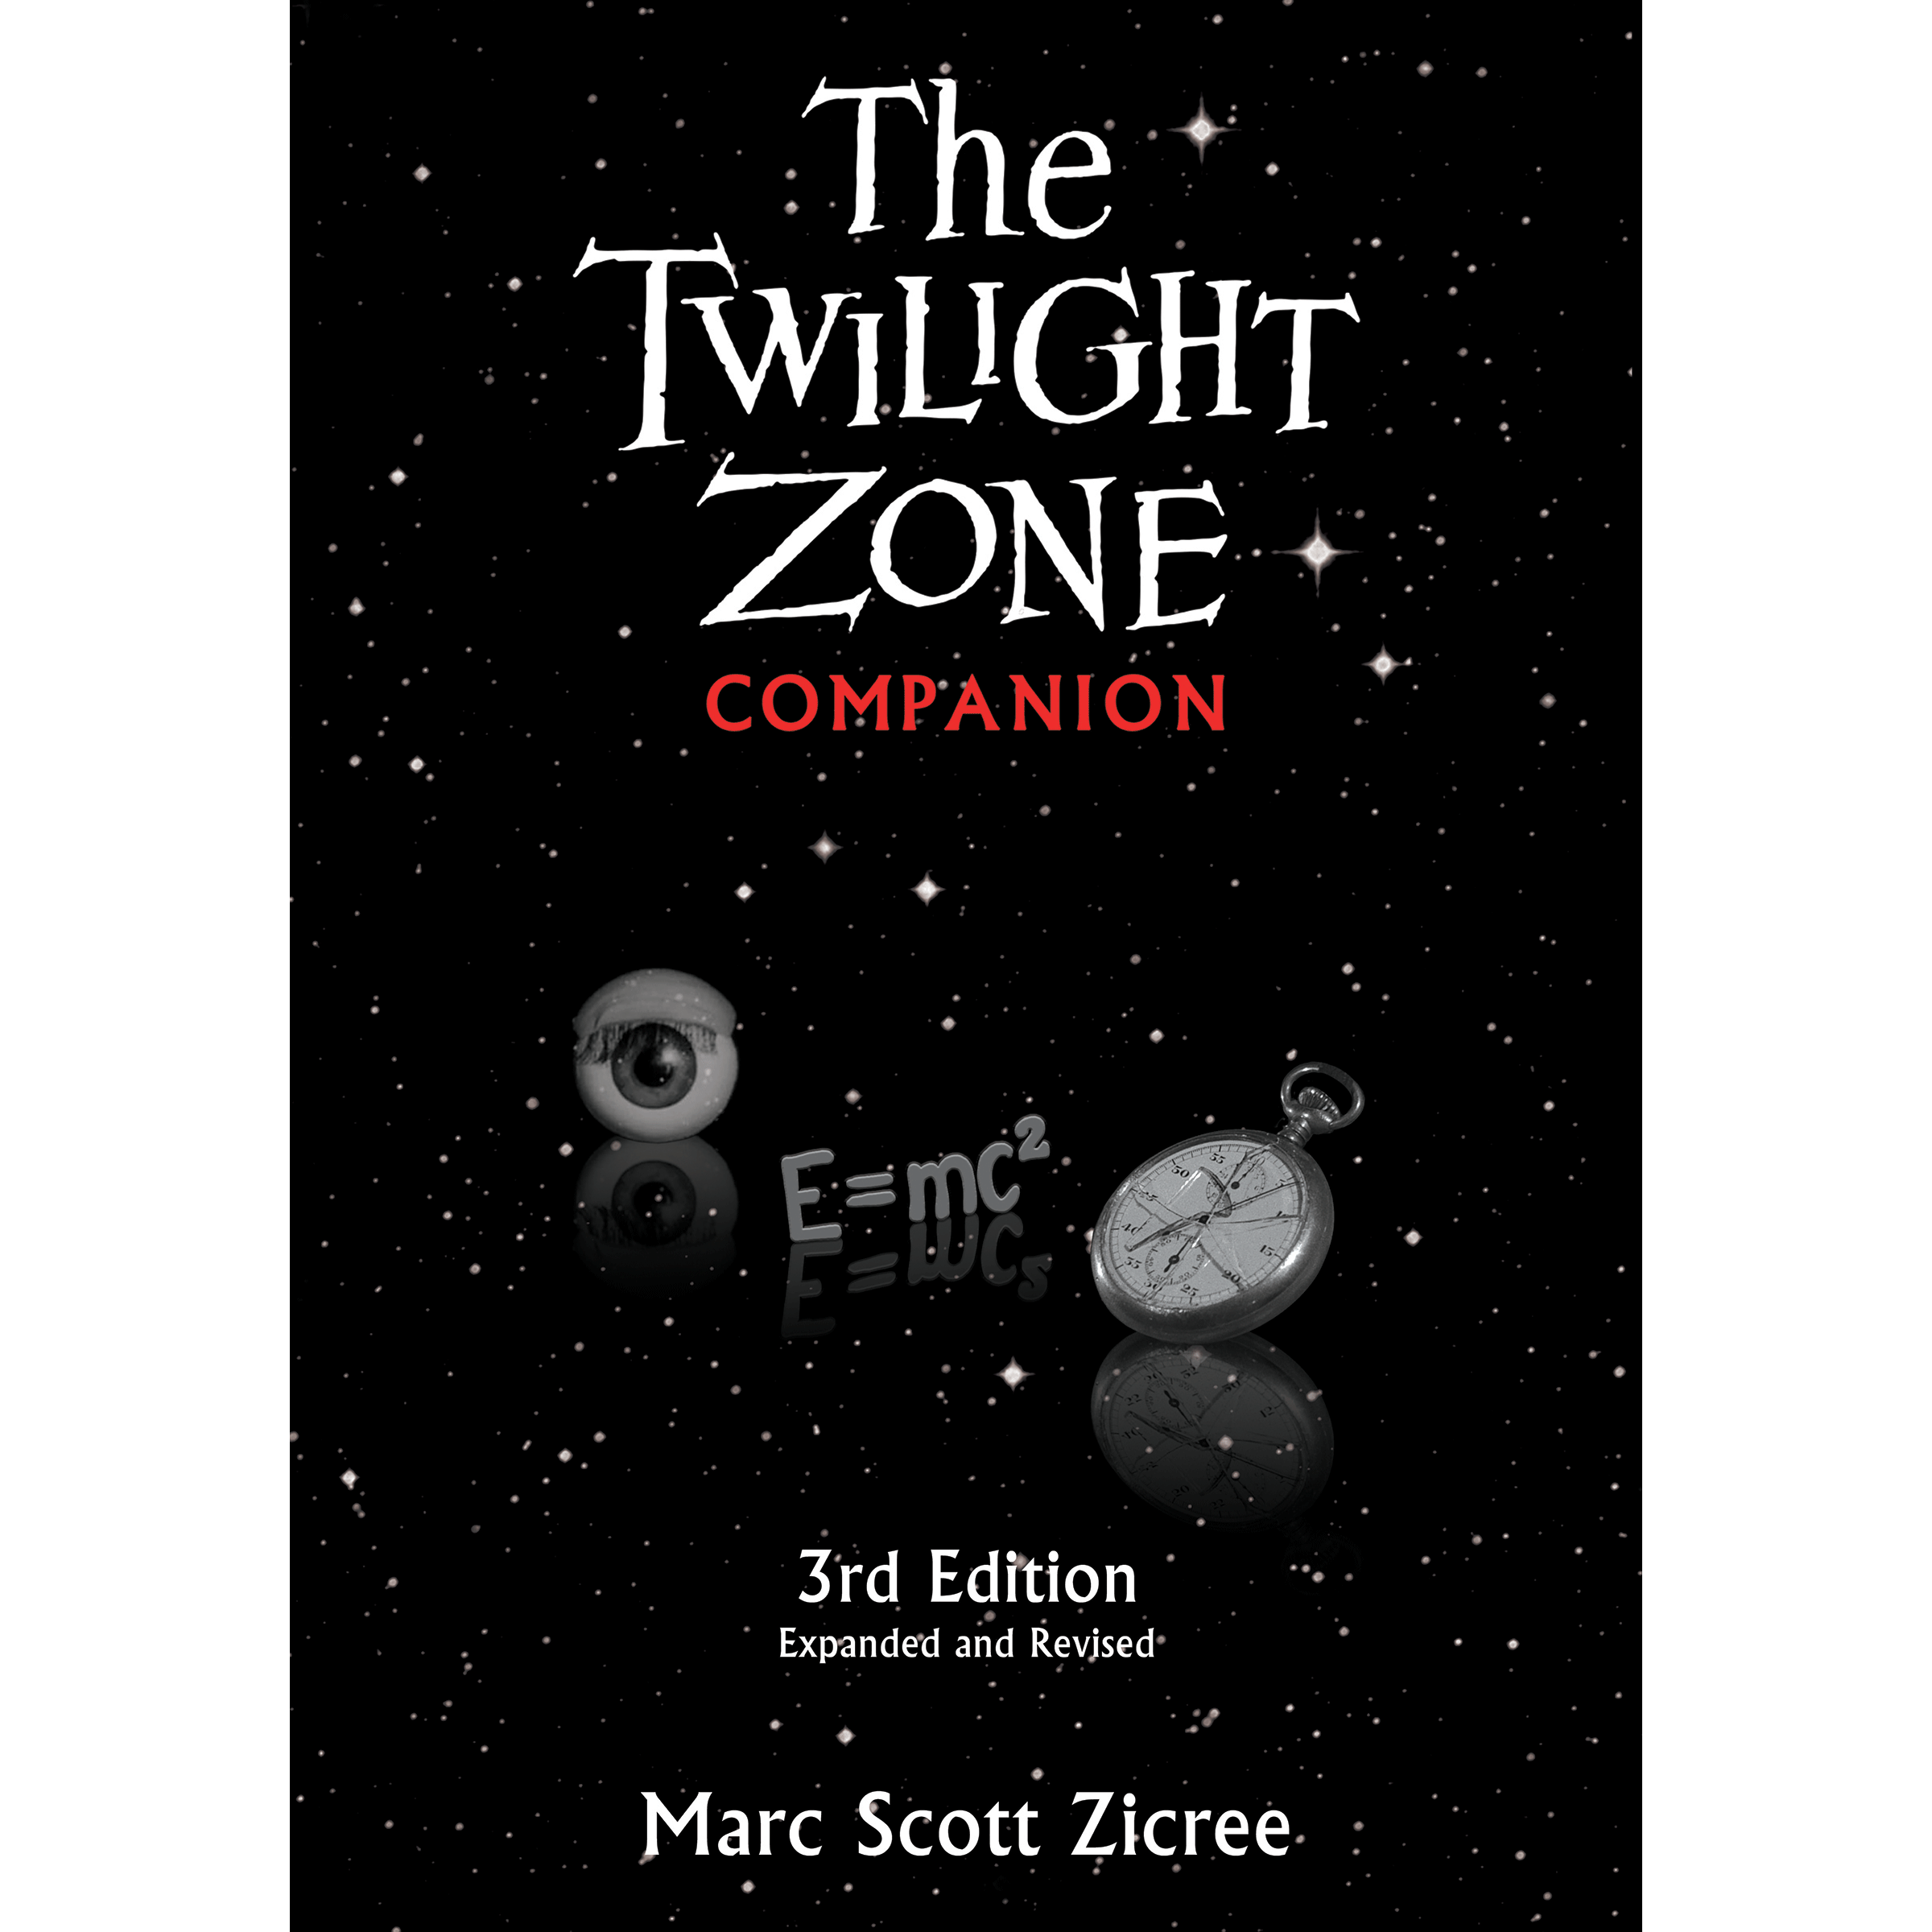 The Twilight Zone Companion, 3rd edition written by Marc Scott Zicree.